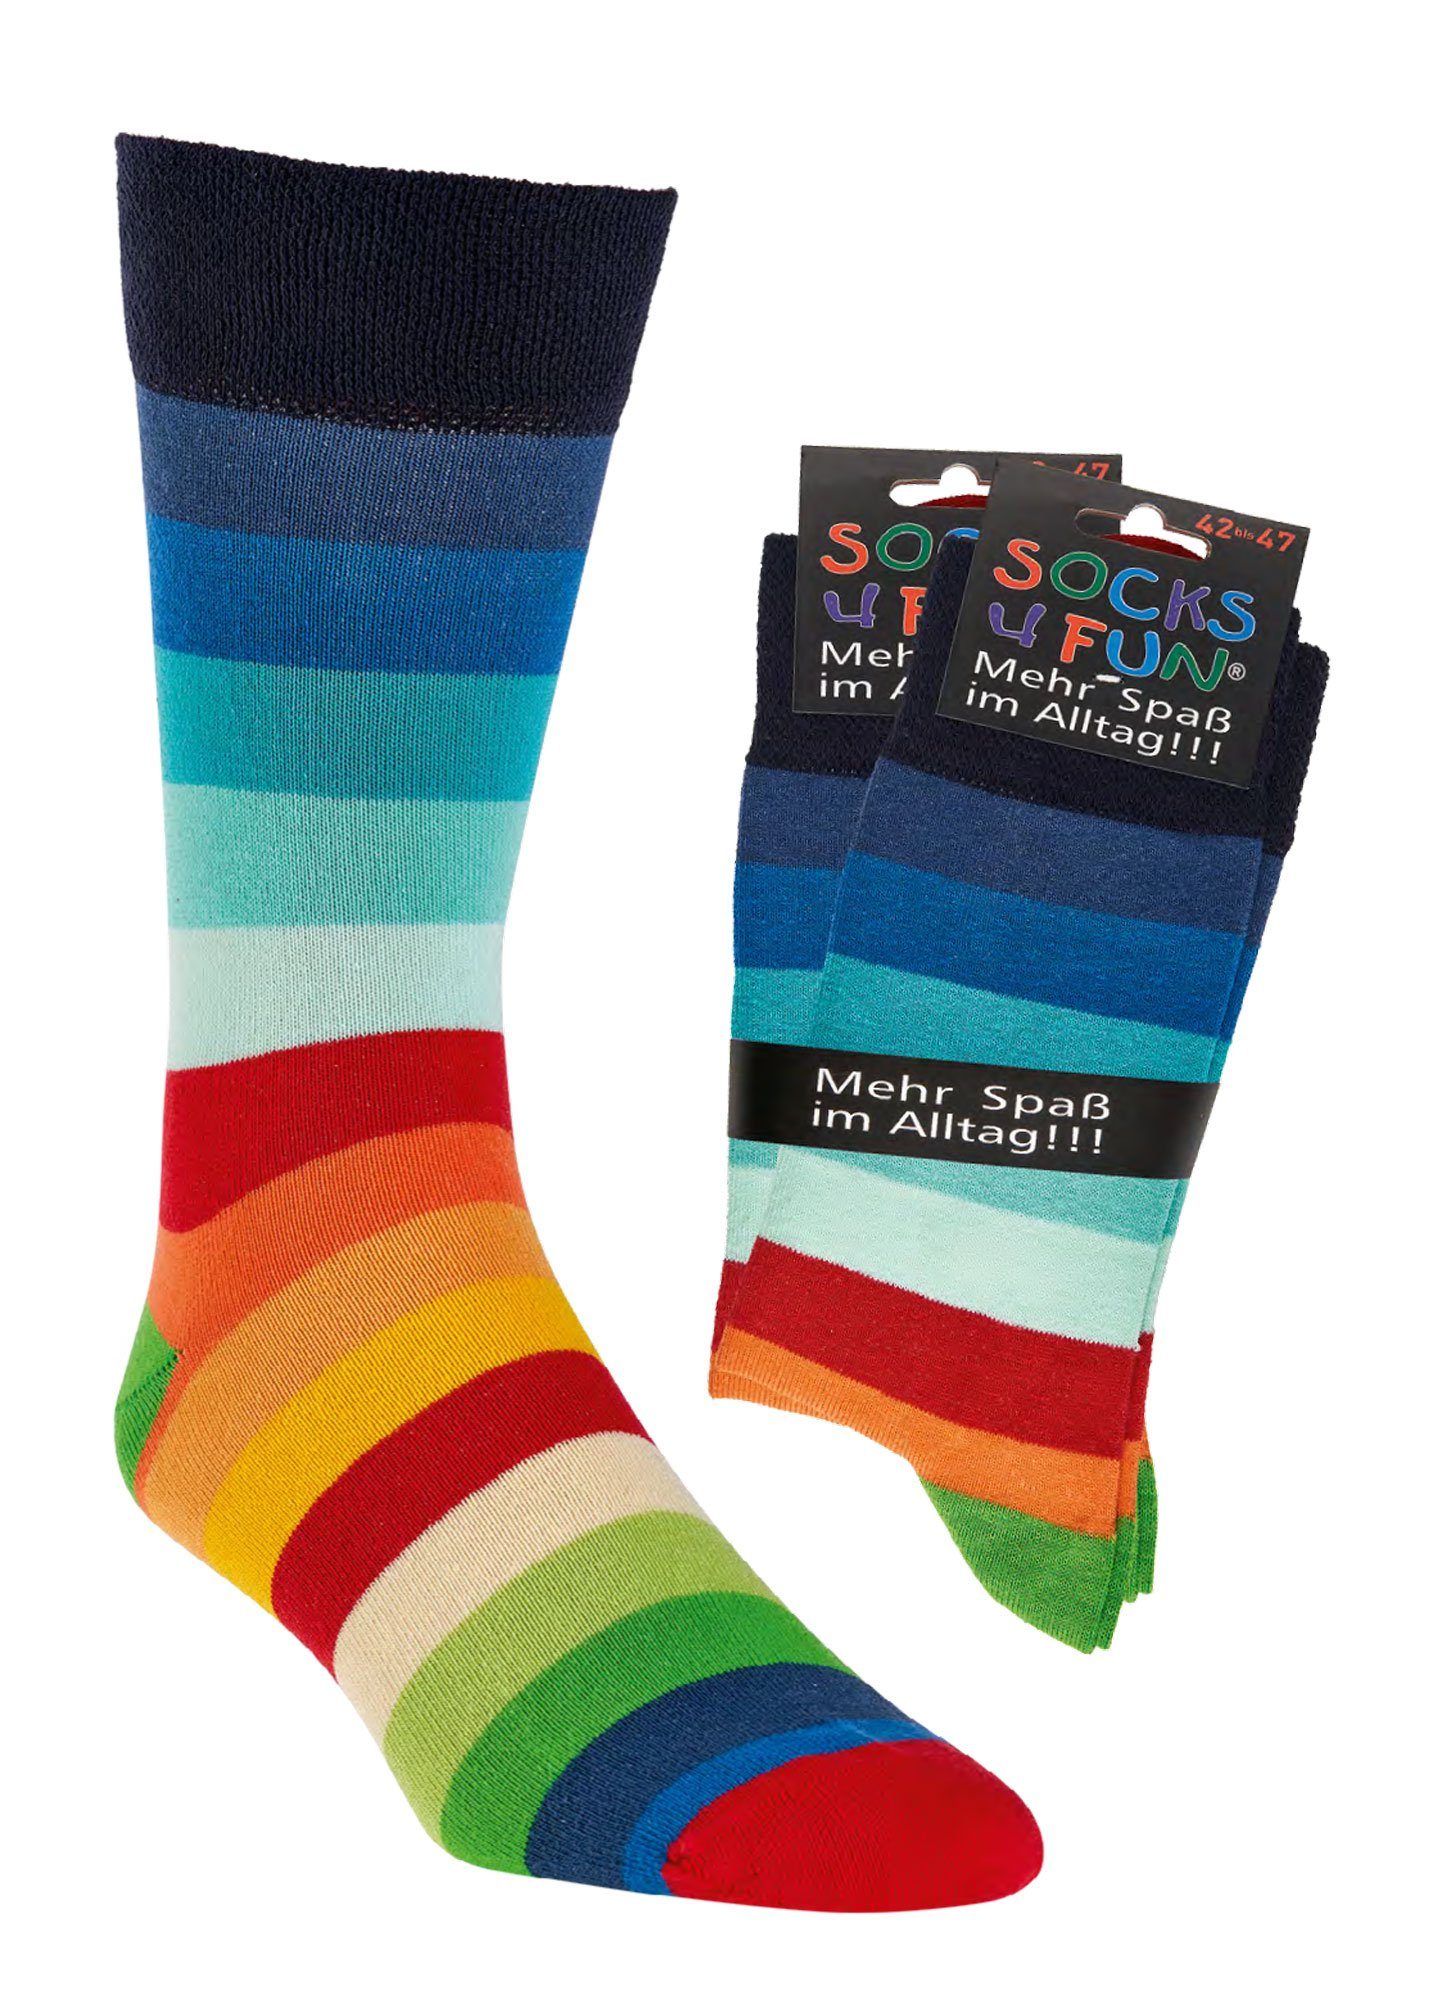 Socks 4 Fun Socken Regenbogen Socken Baumwolle Unisex LGBTQ Rainbow Toleranz (2 Paar)